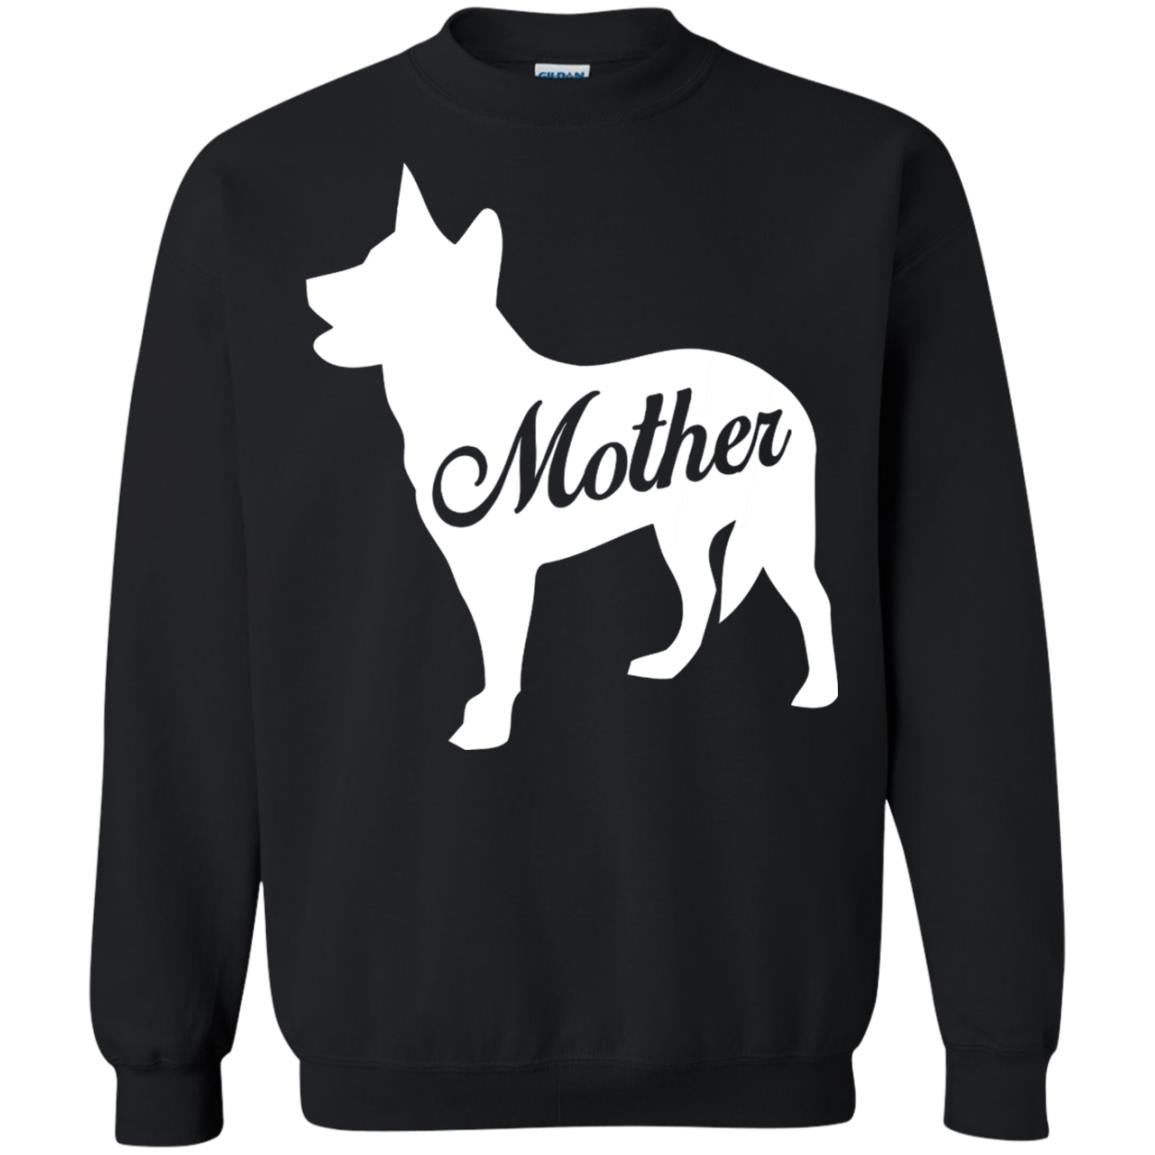 American Cattle Dog Mom T-shirt